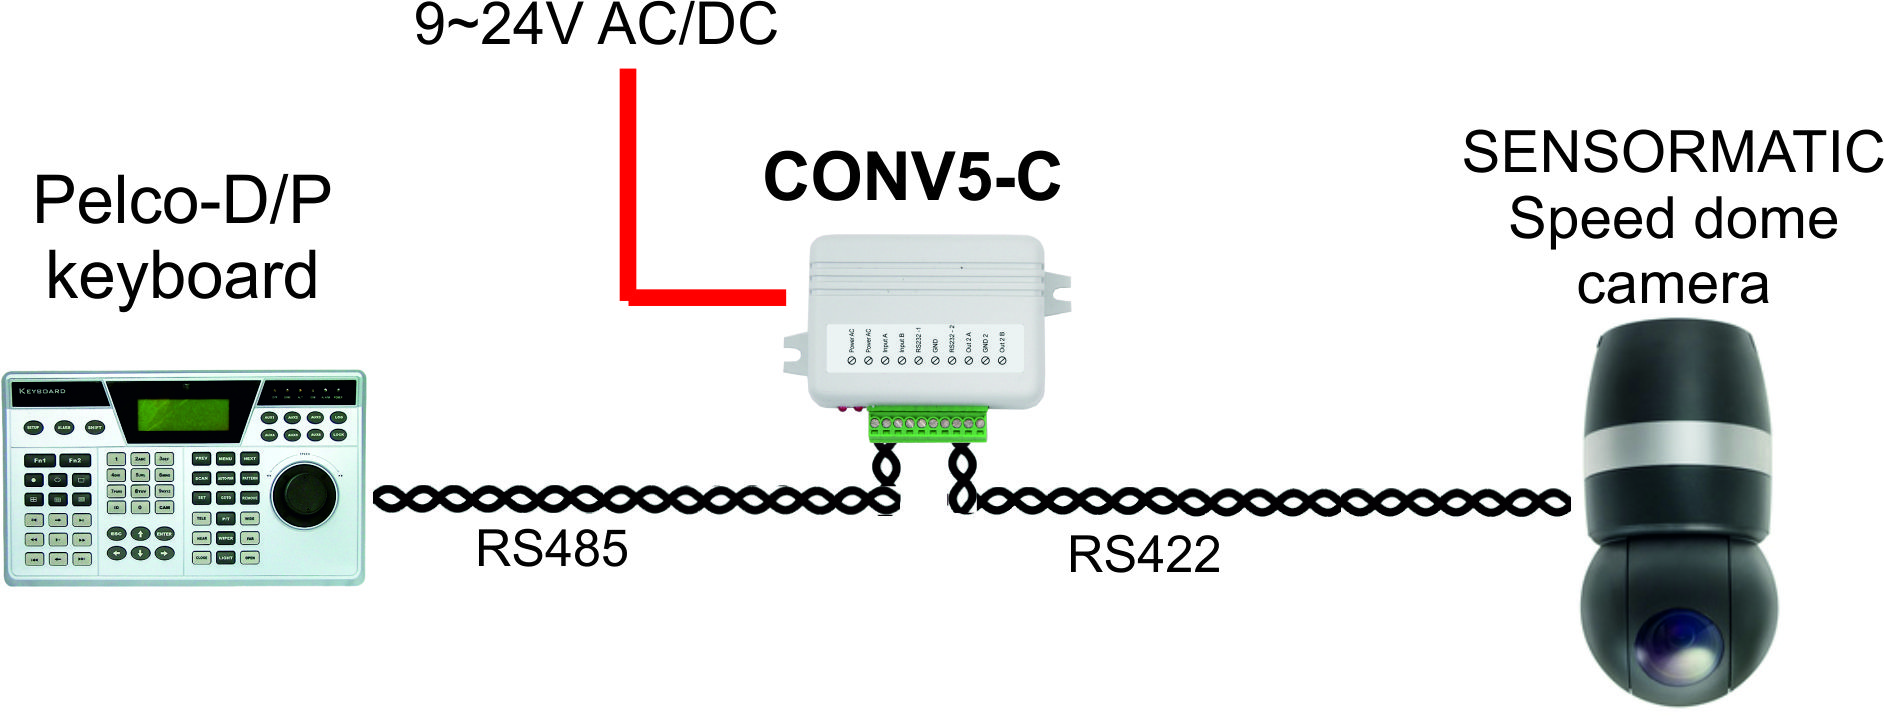 Protocol converter from Pelco-D / Pelco-P to Sensormatic, CONV5-C